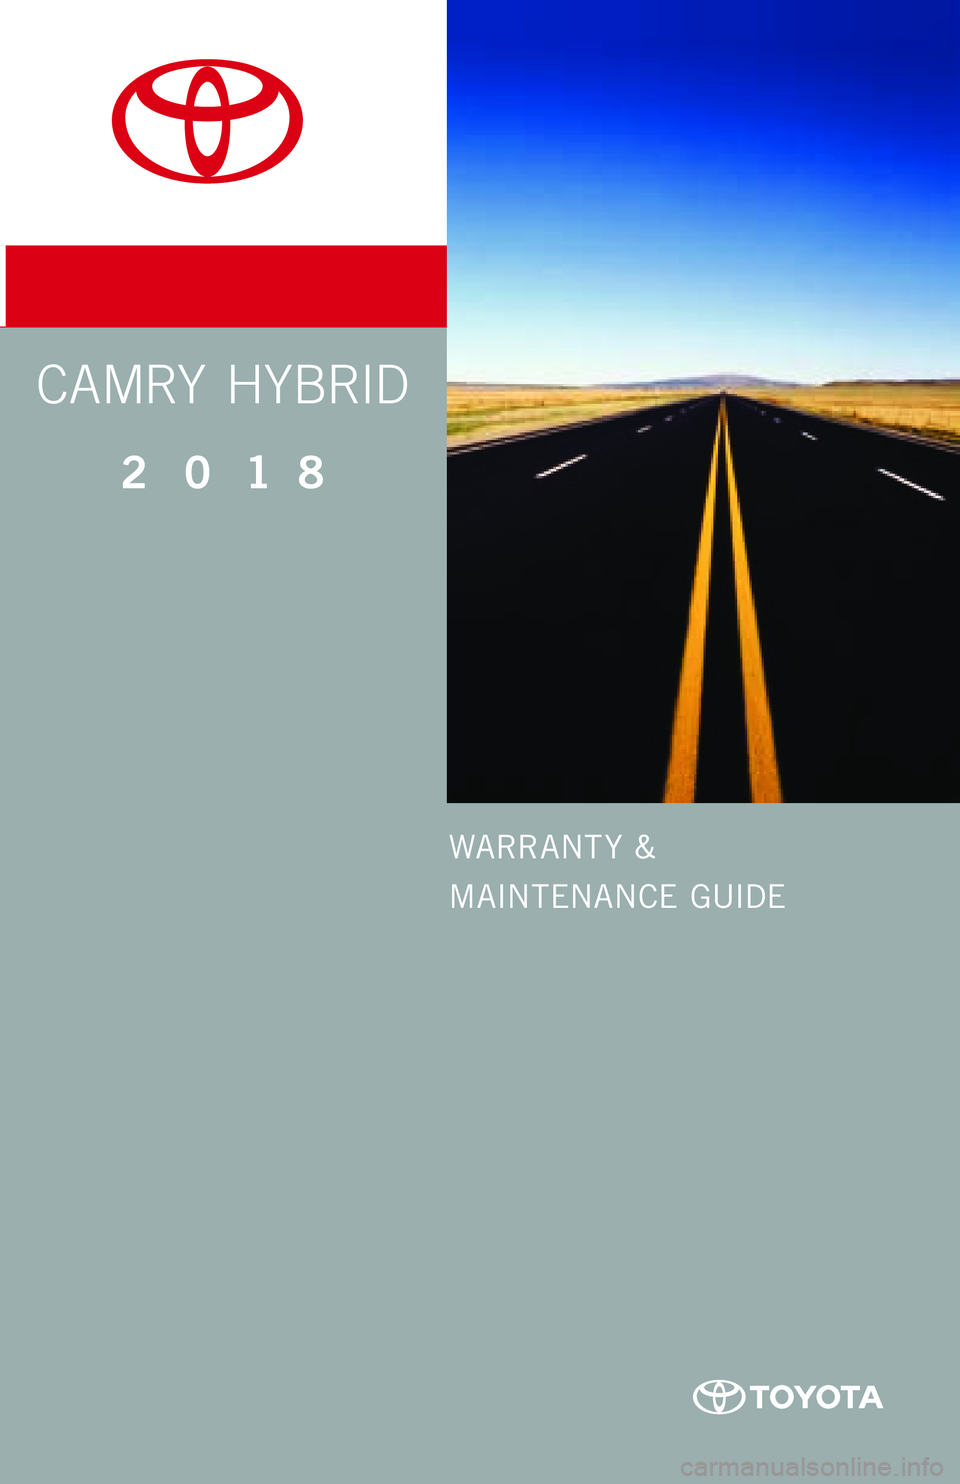 TOYOTA CAMRY HYBRID 2018  Warranties & Maintenance Guides (in English) WARRANT Y &
MAINTENANCE GUIDE
2 0 1 8     
CAMRY  HYBRID
CamryHybrid_COVER_SPLIT.indd   36/30/17   12:19 PM 